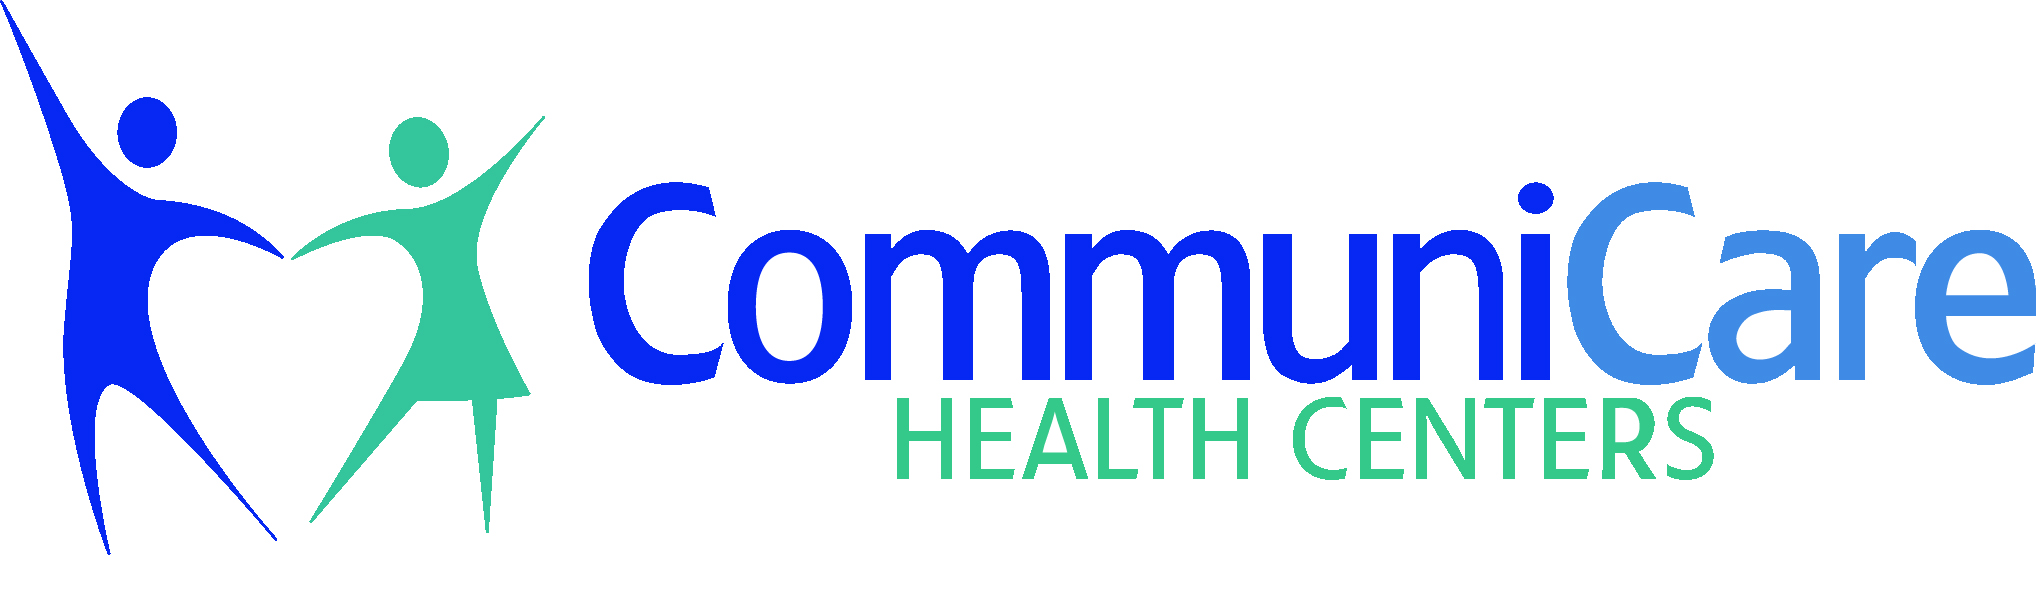 CommuniCare Health Centers